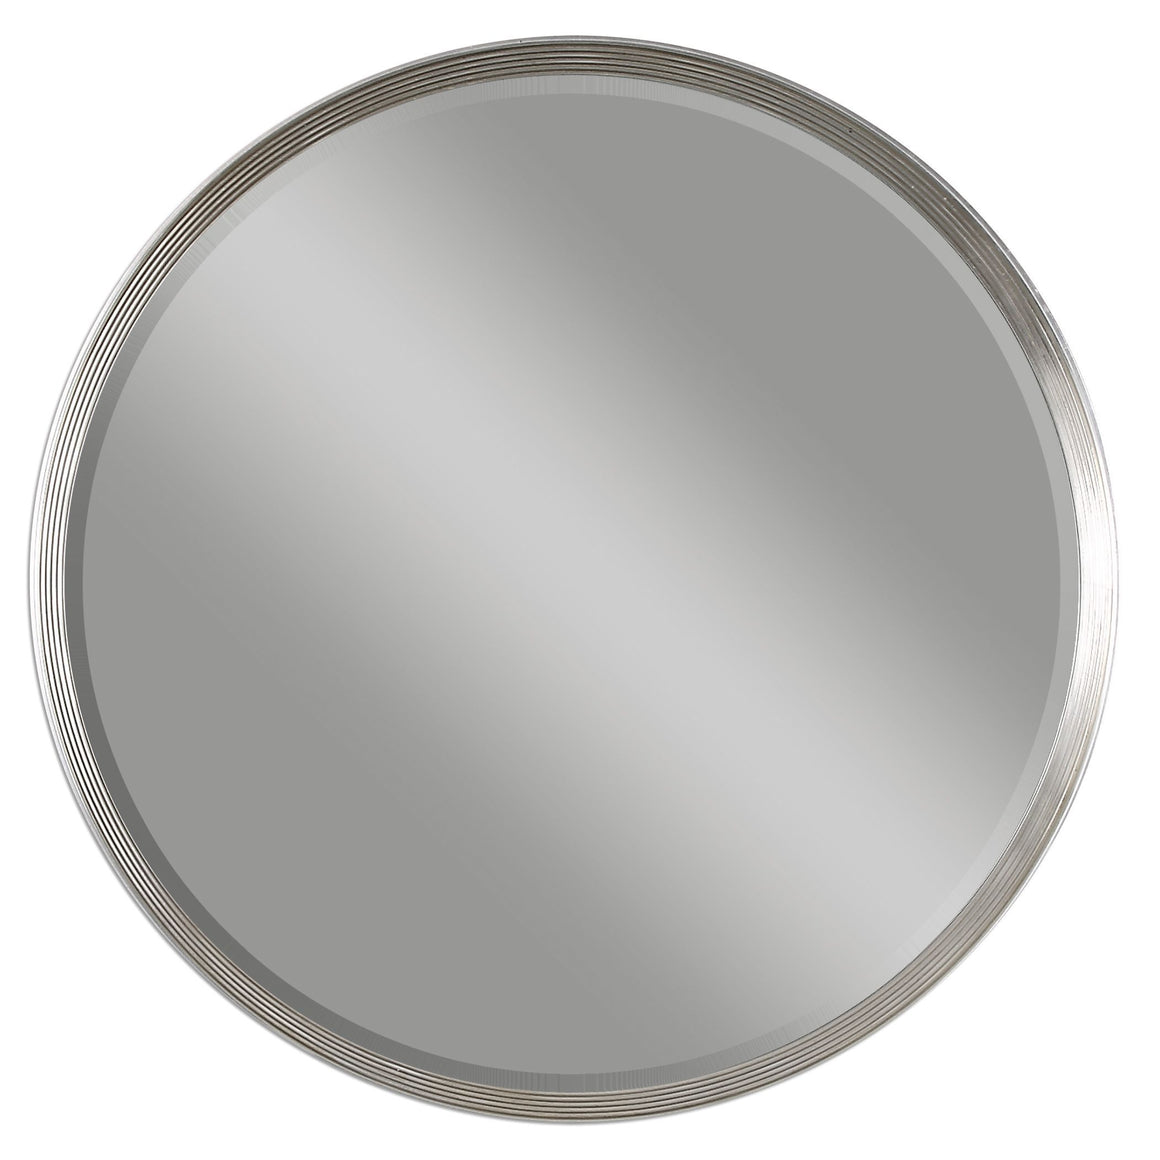 Serenza Round Silver Mirror - taylor ray decor